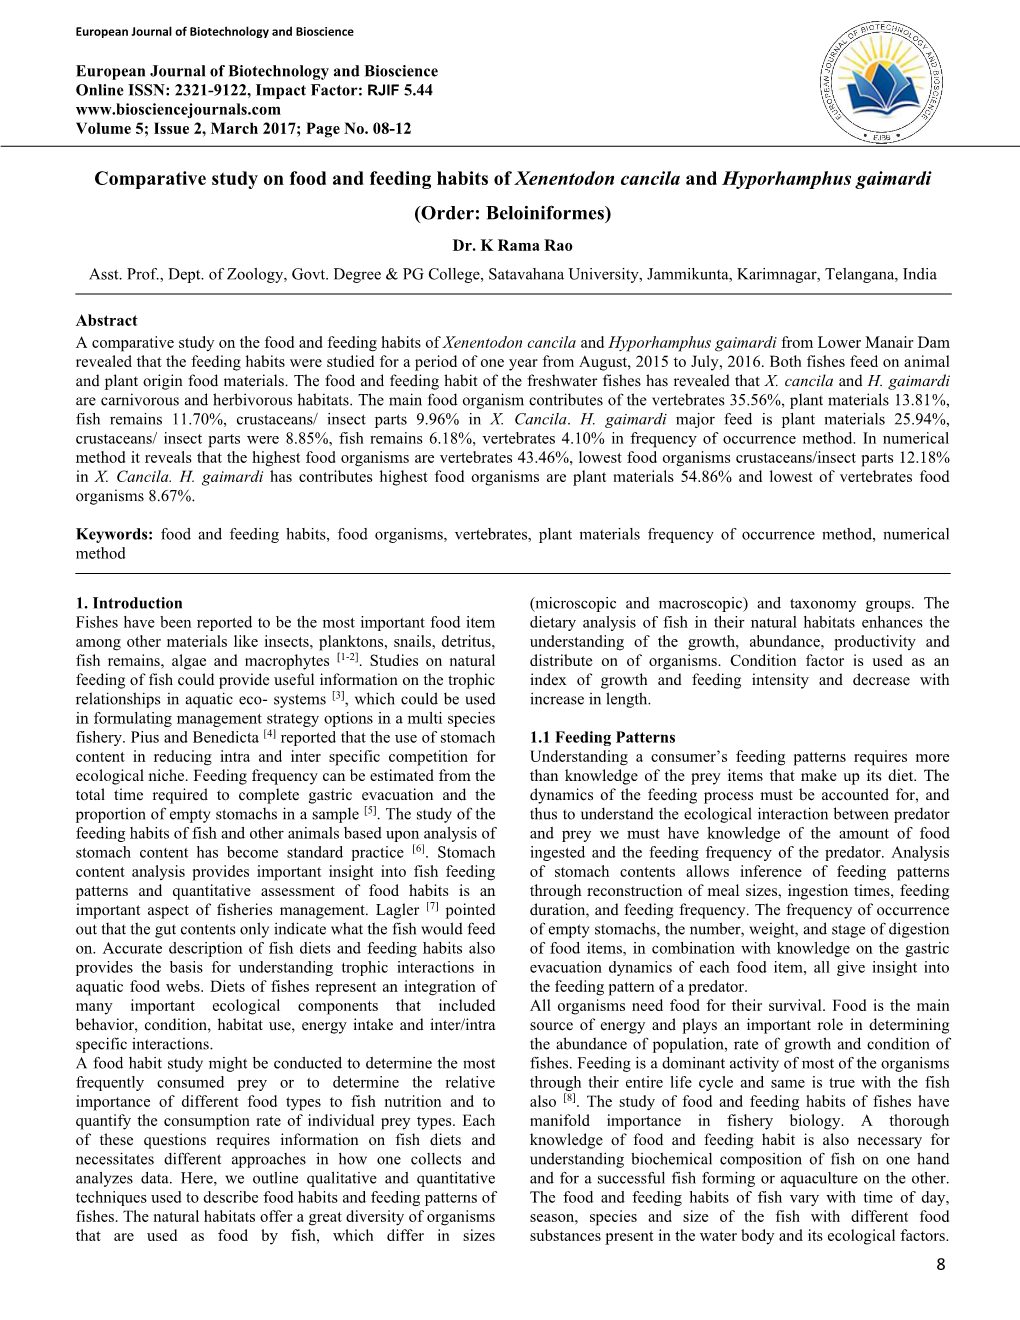 Comparative Study on Food and Feeding Habits of Xenentodon Cancila and Hyporhamphus Gaimardi (Order: Beloiniformes) Dr